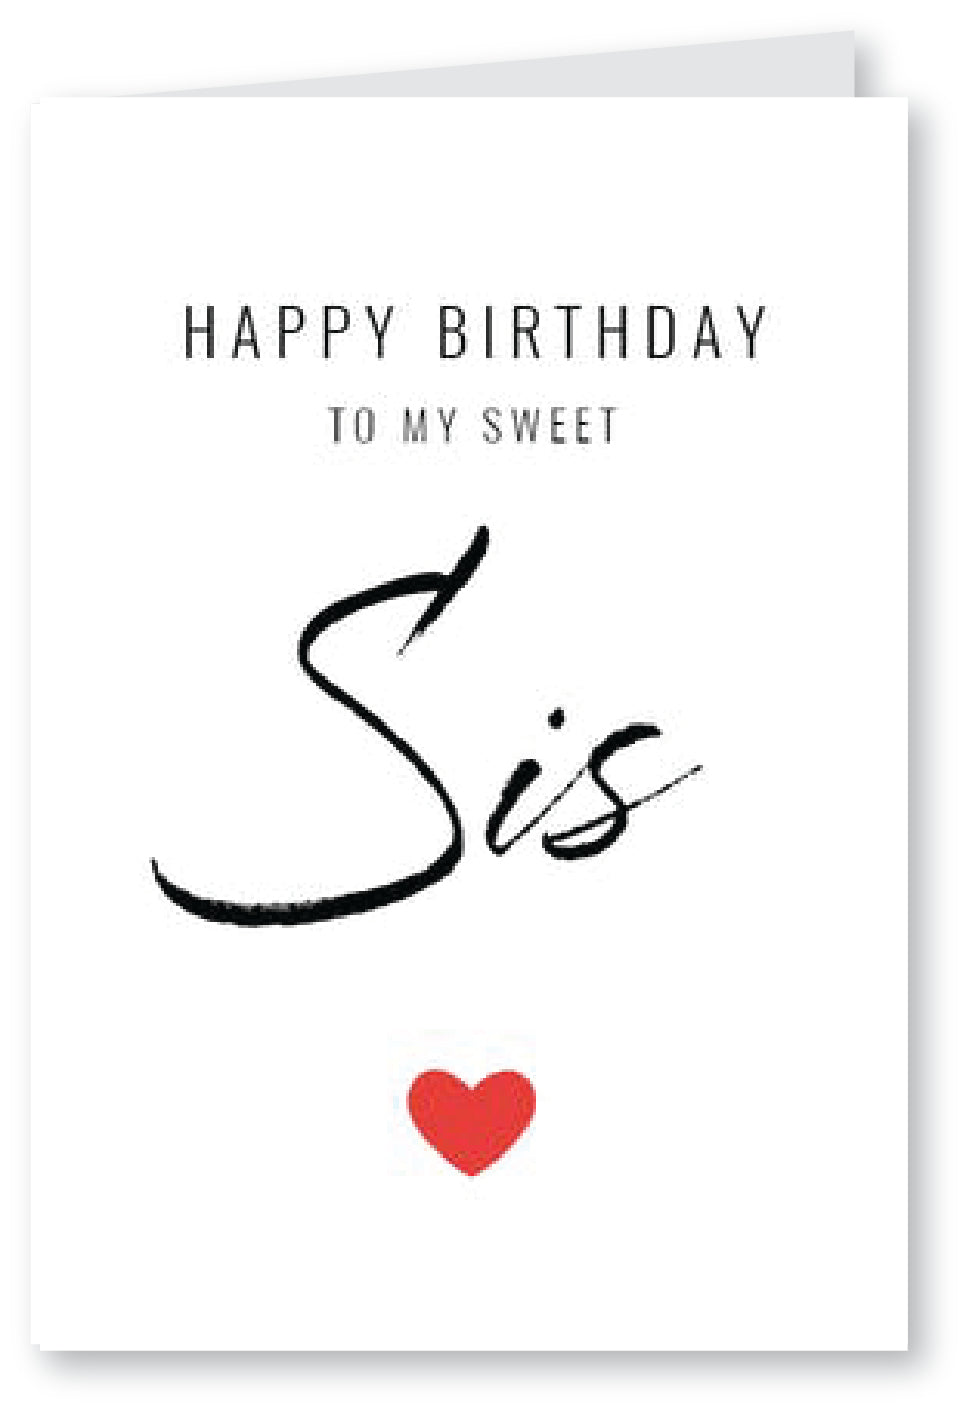 My Sweet Sis - Birthday Card